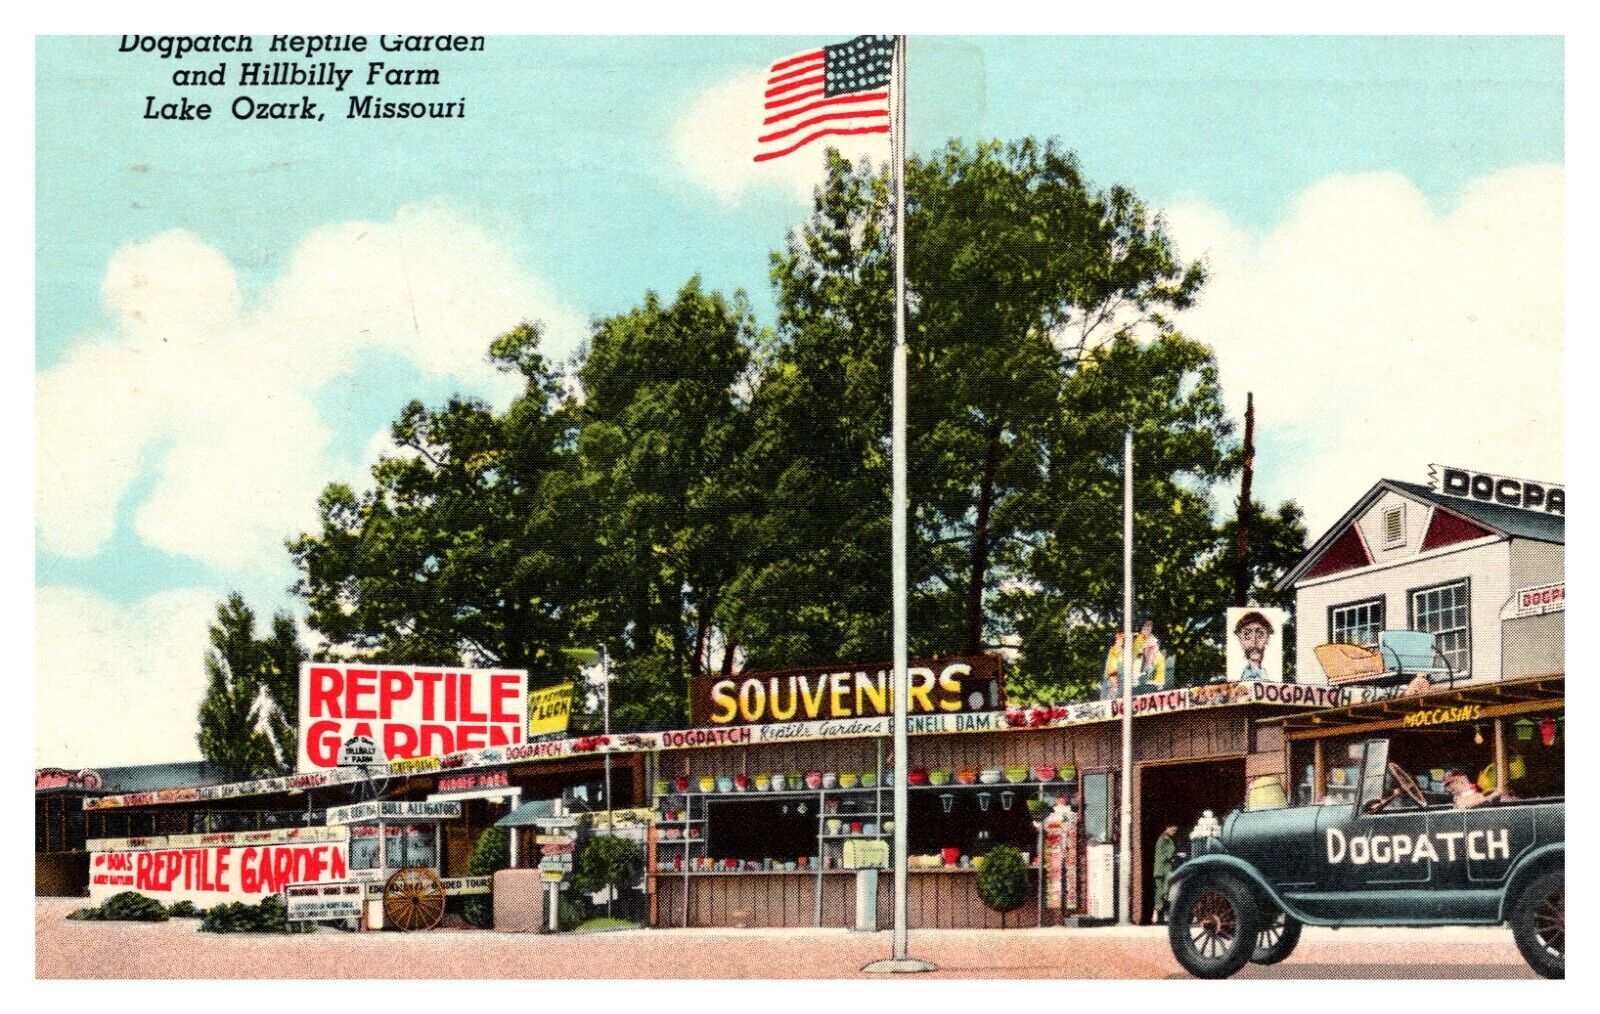 Vtg Dogpatch Reptile Garden and Hillbilly Farm Lake Ozark, Missouri Postcard#622